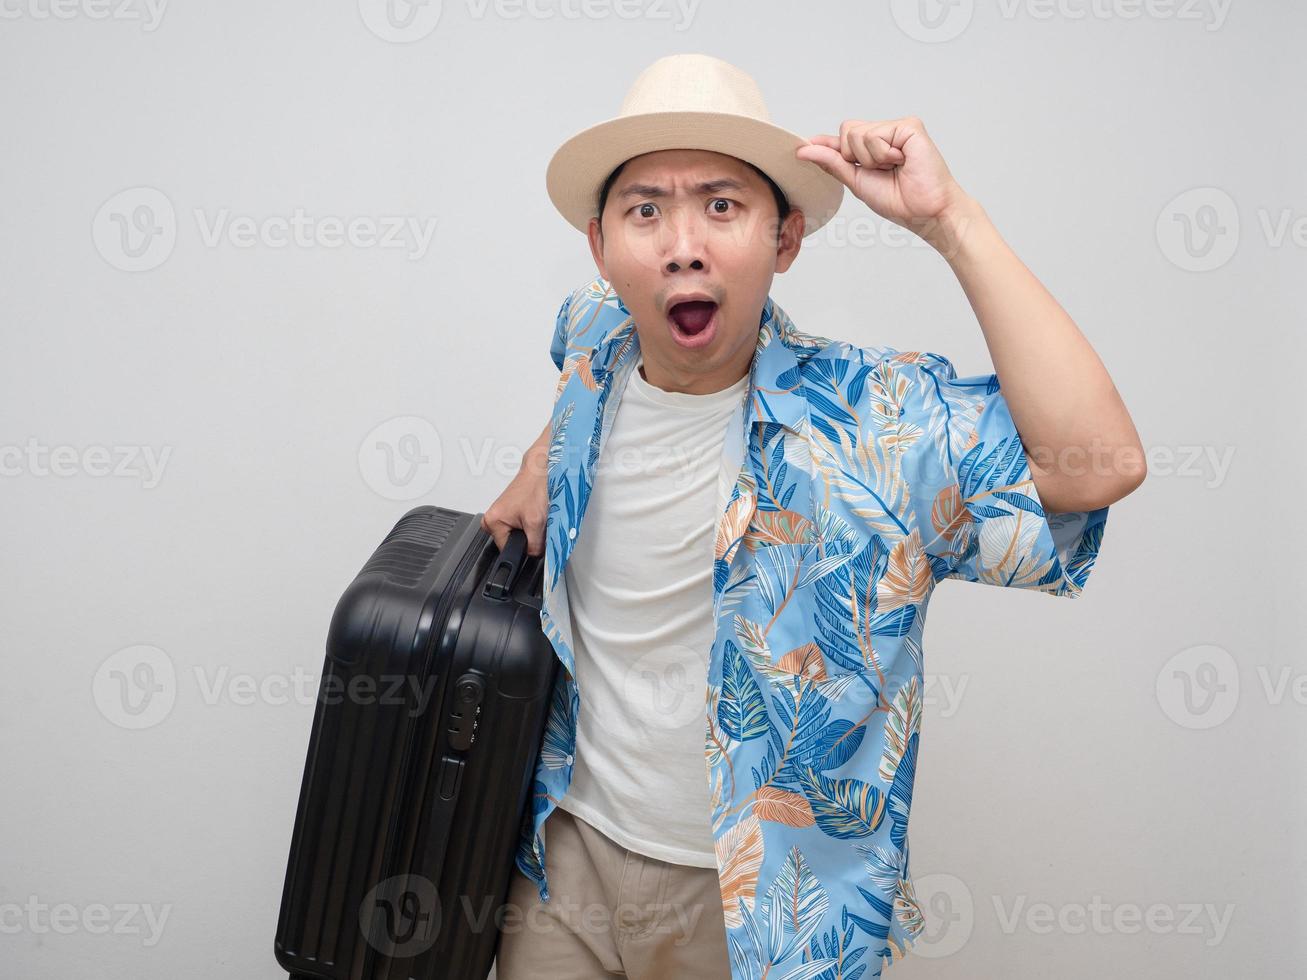 toerisme Mens slijtage hoed dragen bagage gebaar versteld staan met vakantie foto